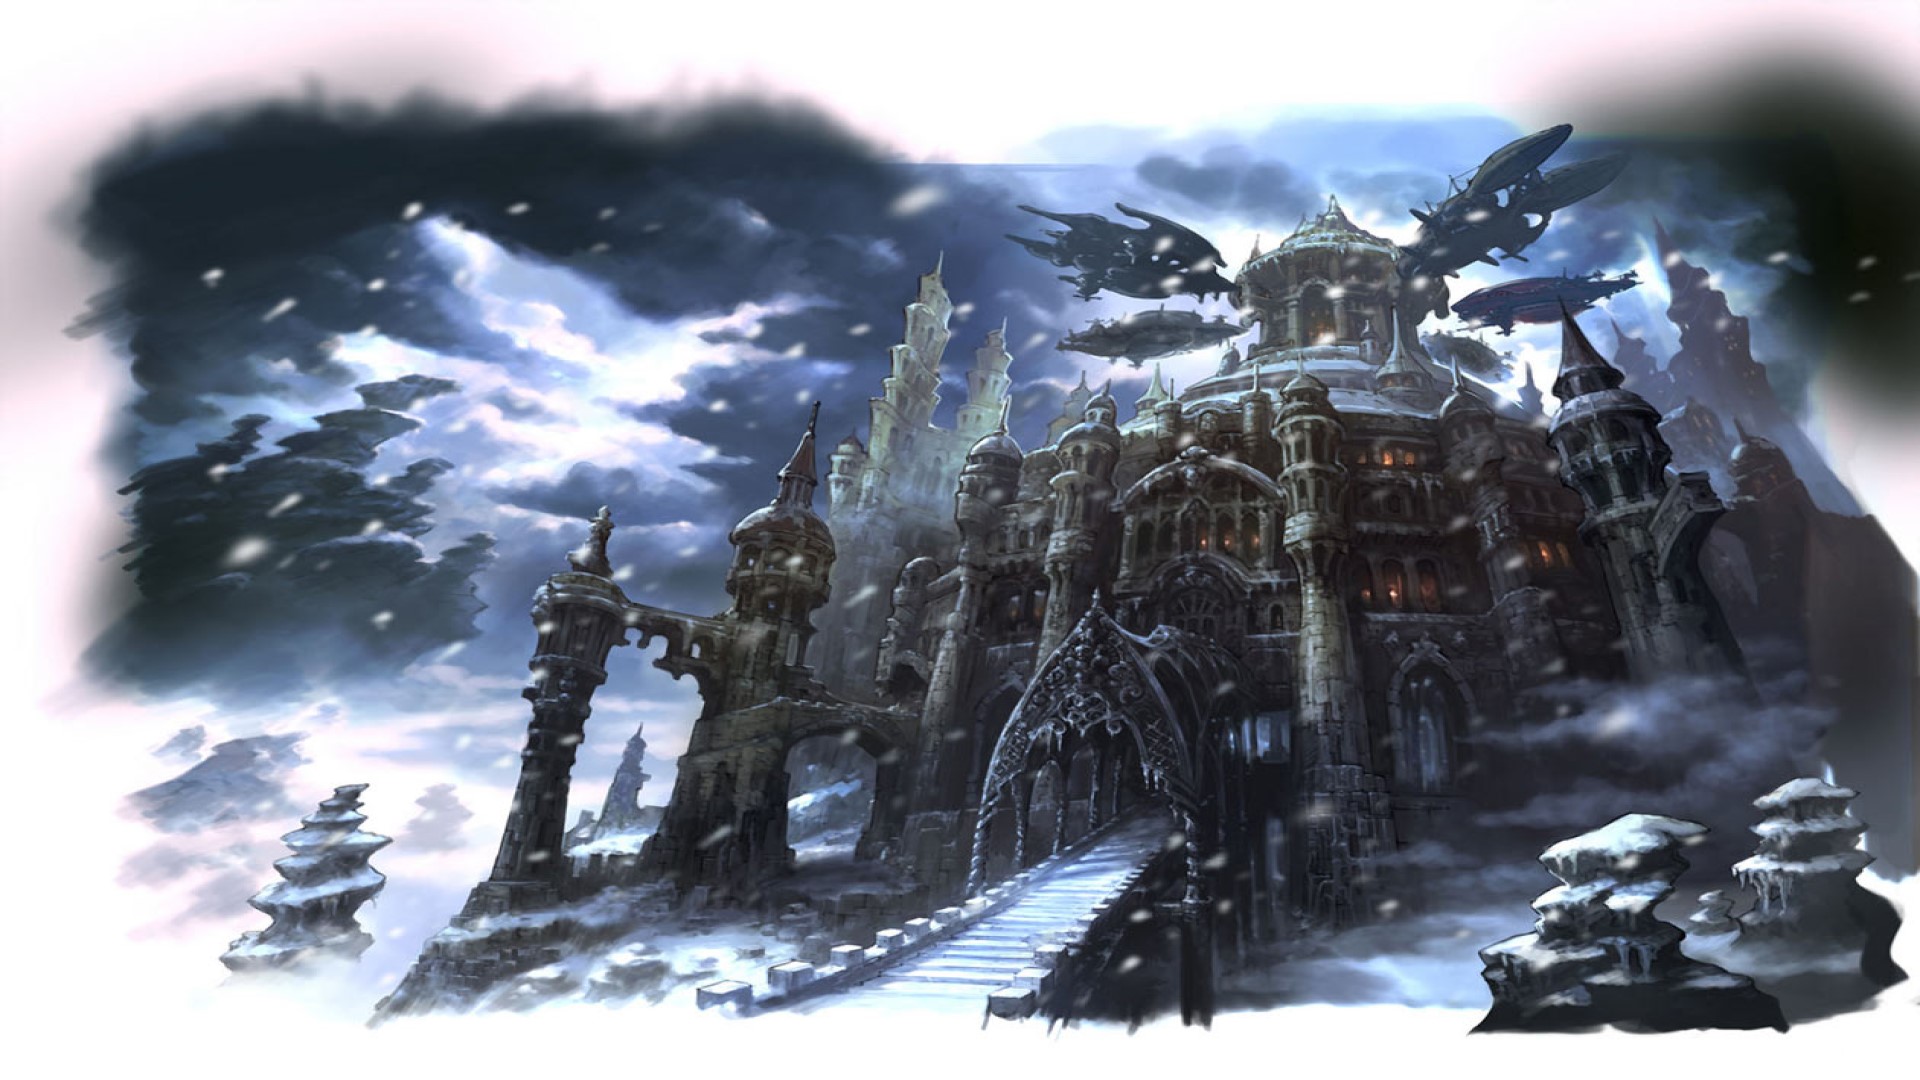 Sinister concept art of the frozen city Bravely Default